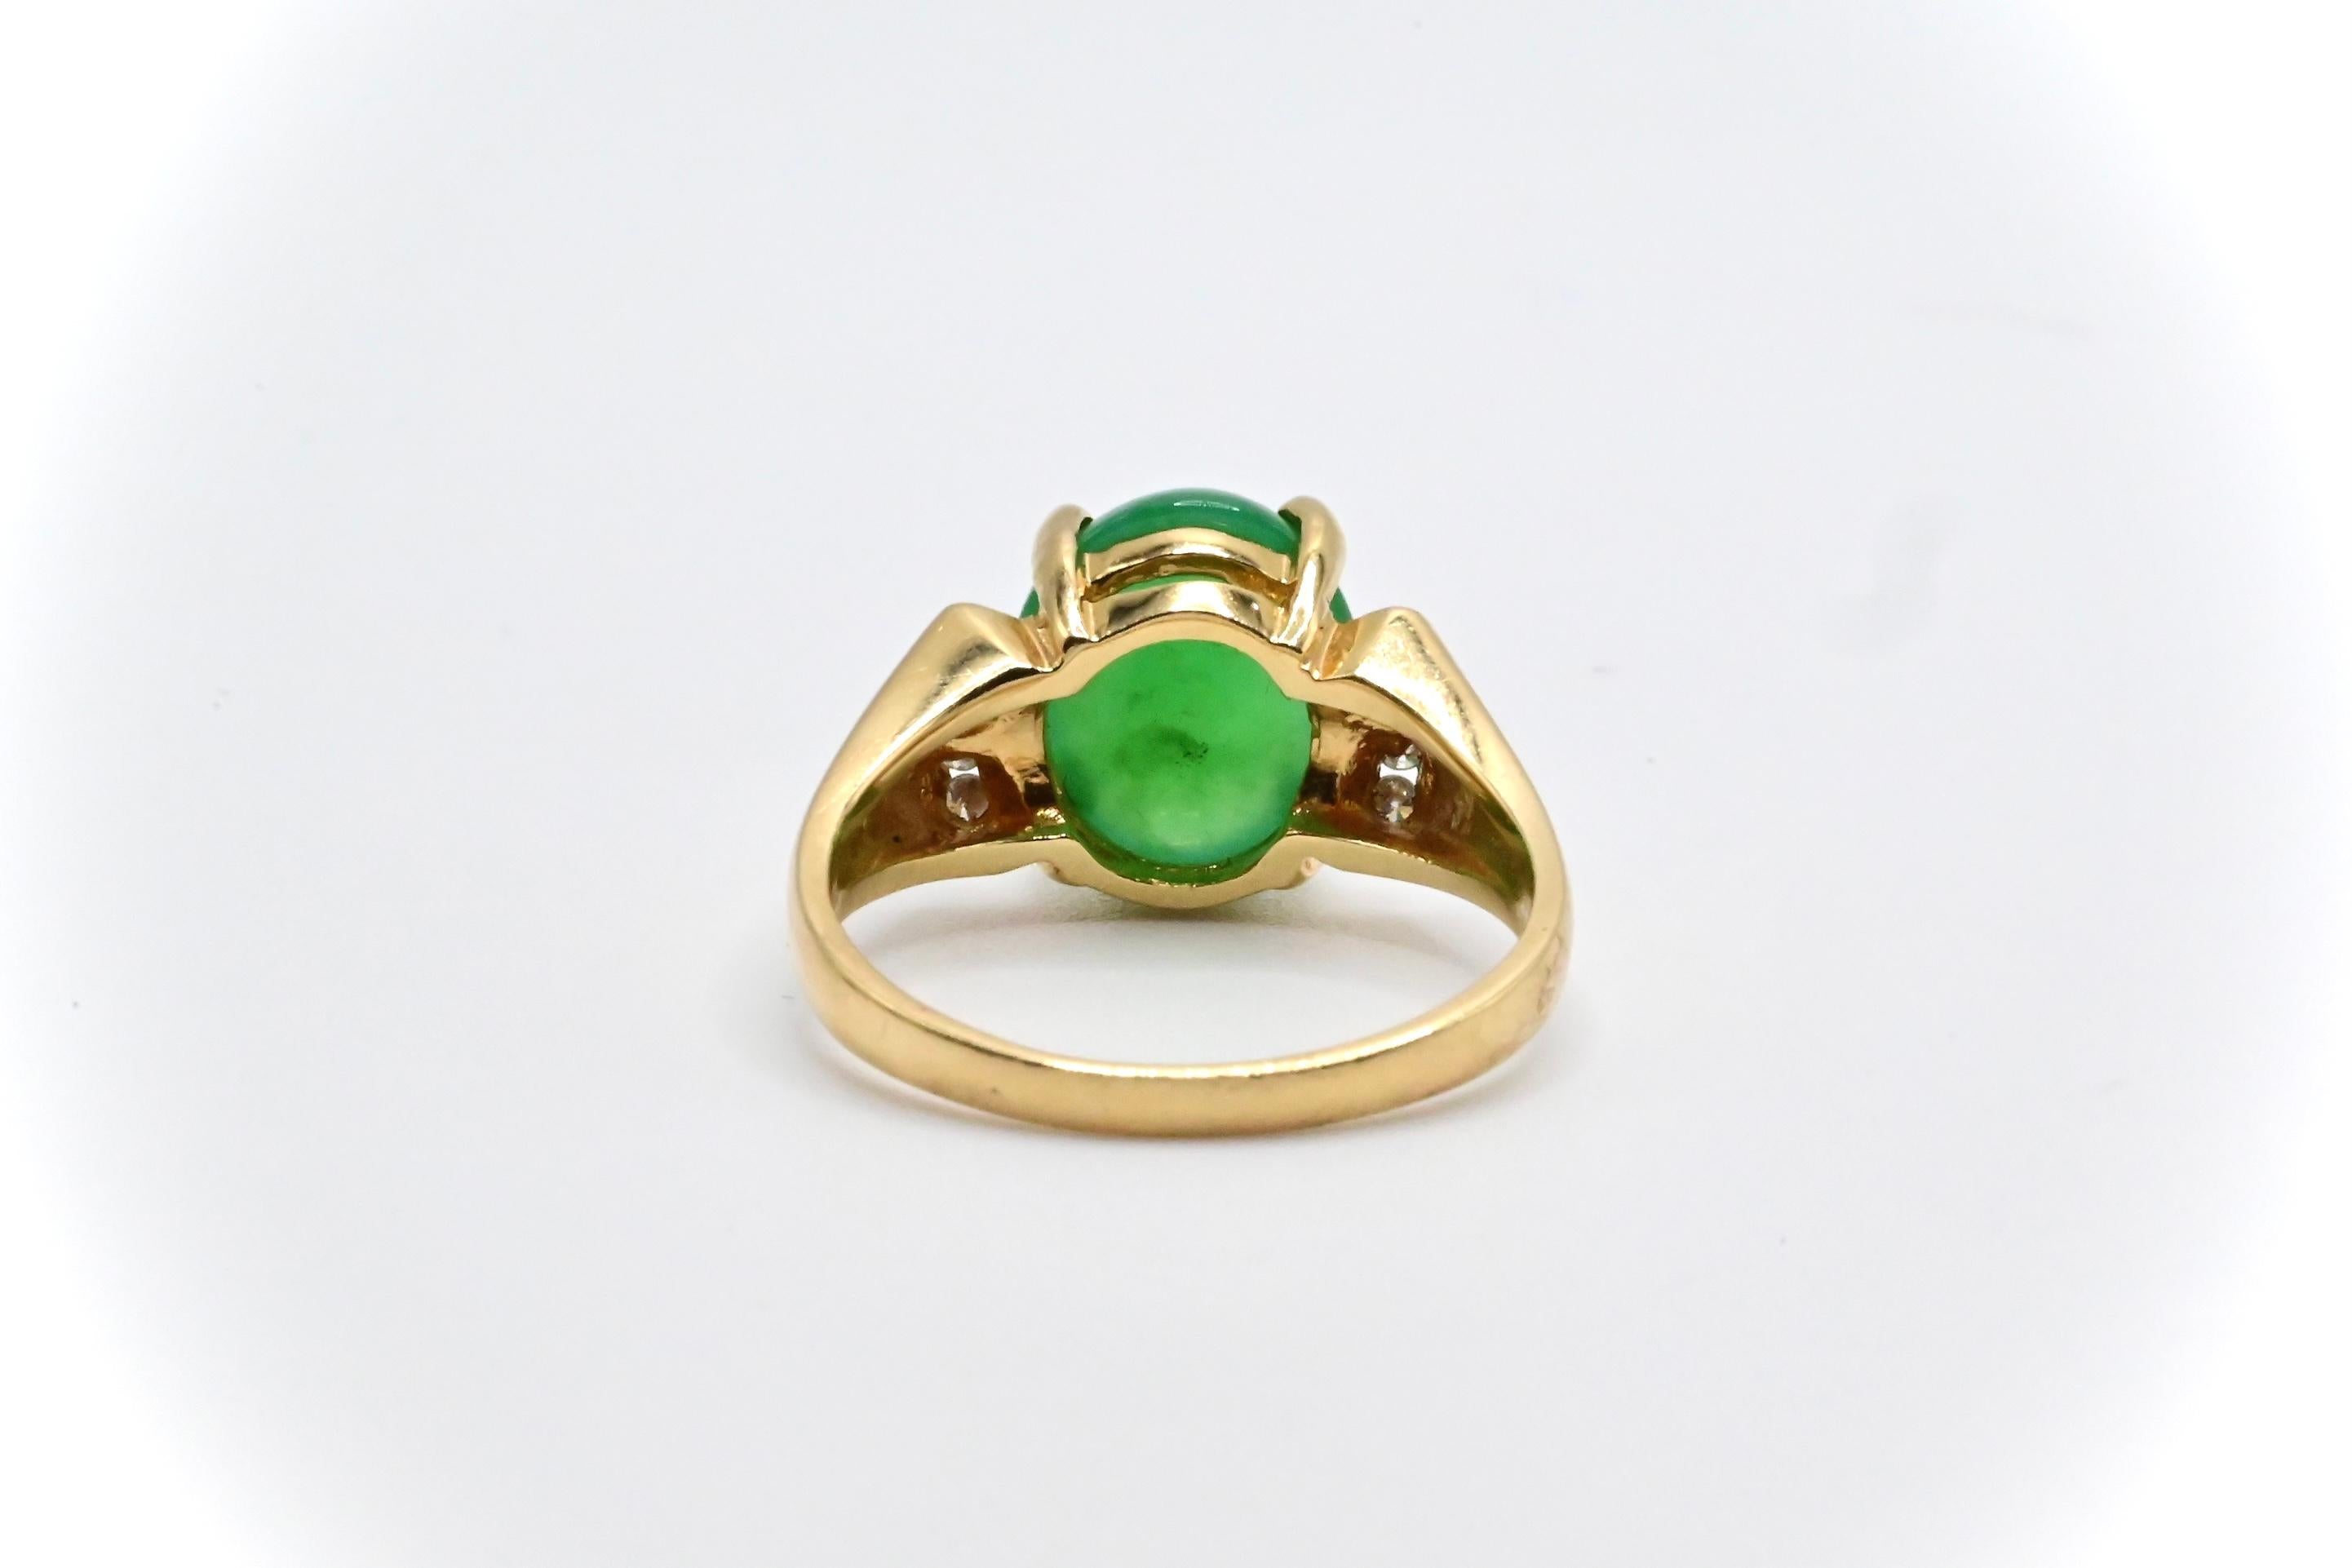 Oval Cut Stunning 18k Yellow Gold & Jade Ring